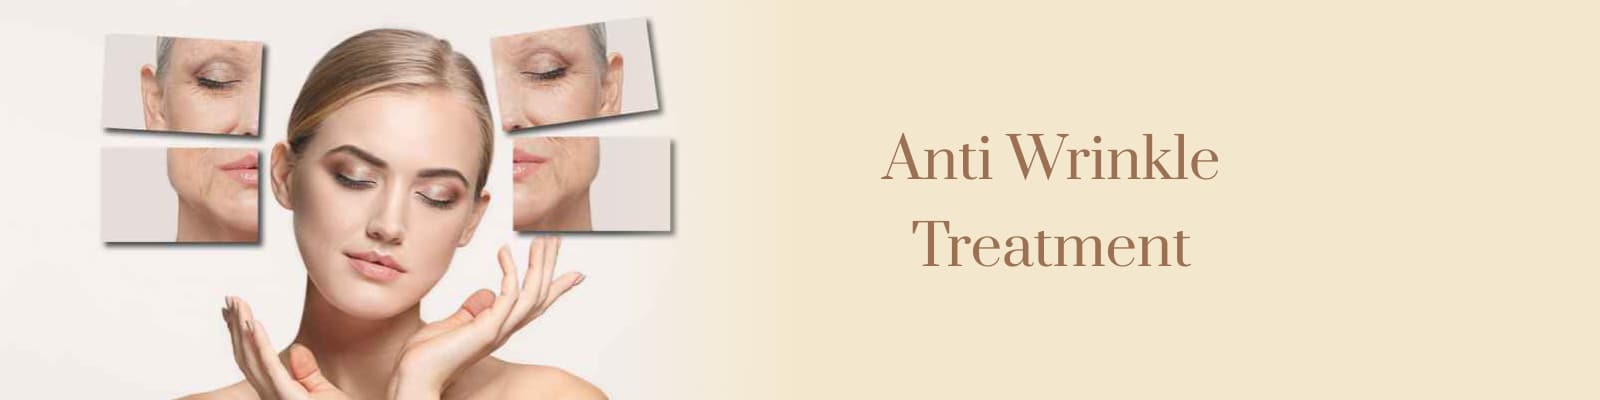 https://www.drsyed.in/anti-wrinkle-treatment/images/Anti-wrinkle-treatment-in-delhi-banner.jpeg